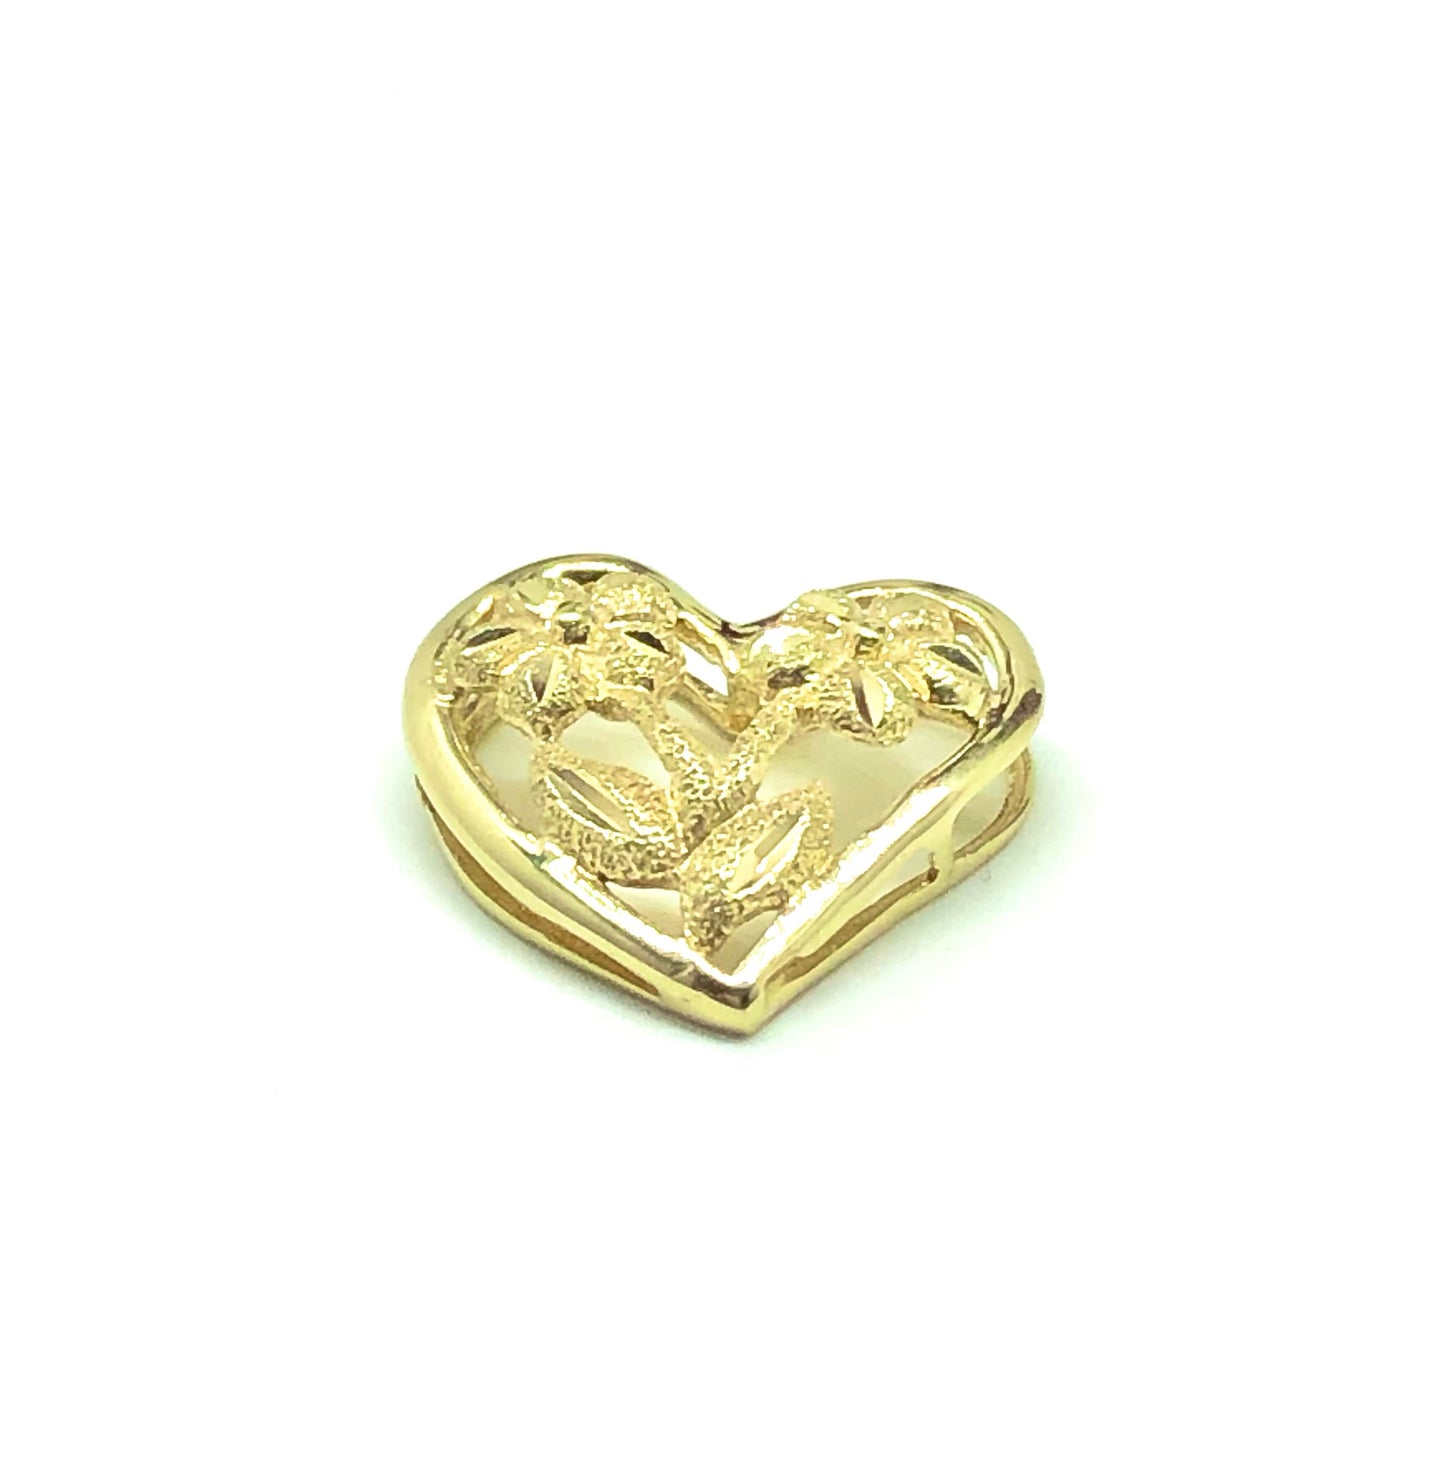  Jewelry Womens 10k Gold Glittery Sandblasted Cut-out Flower Design Heart Pendant